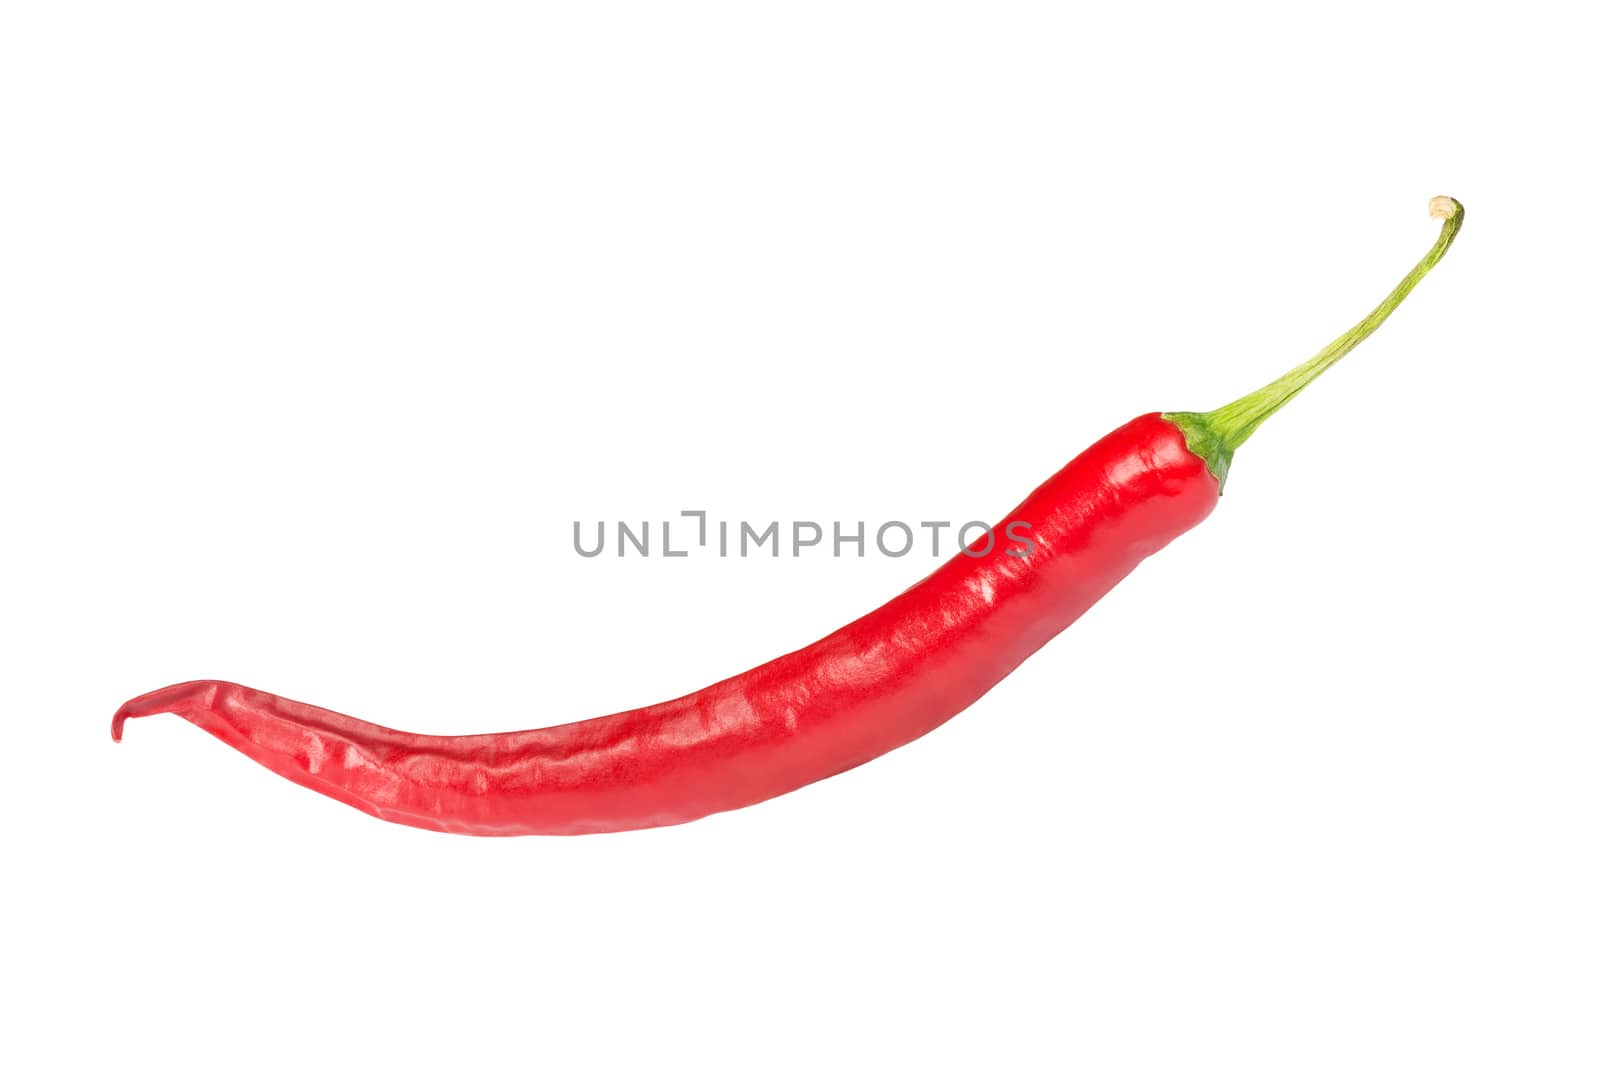 Chili pepper on white background by Epitavi